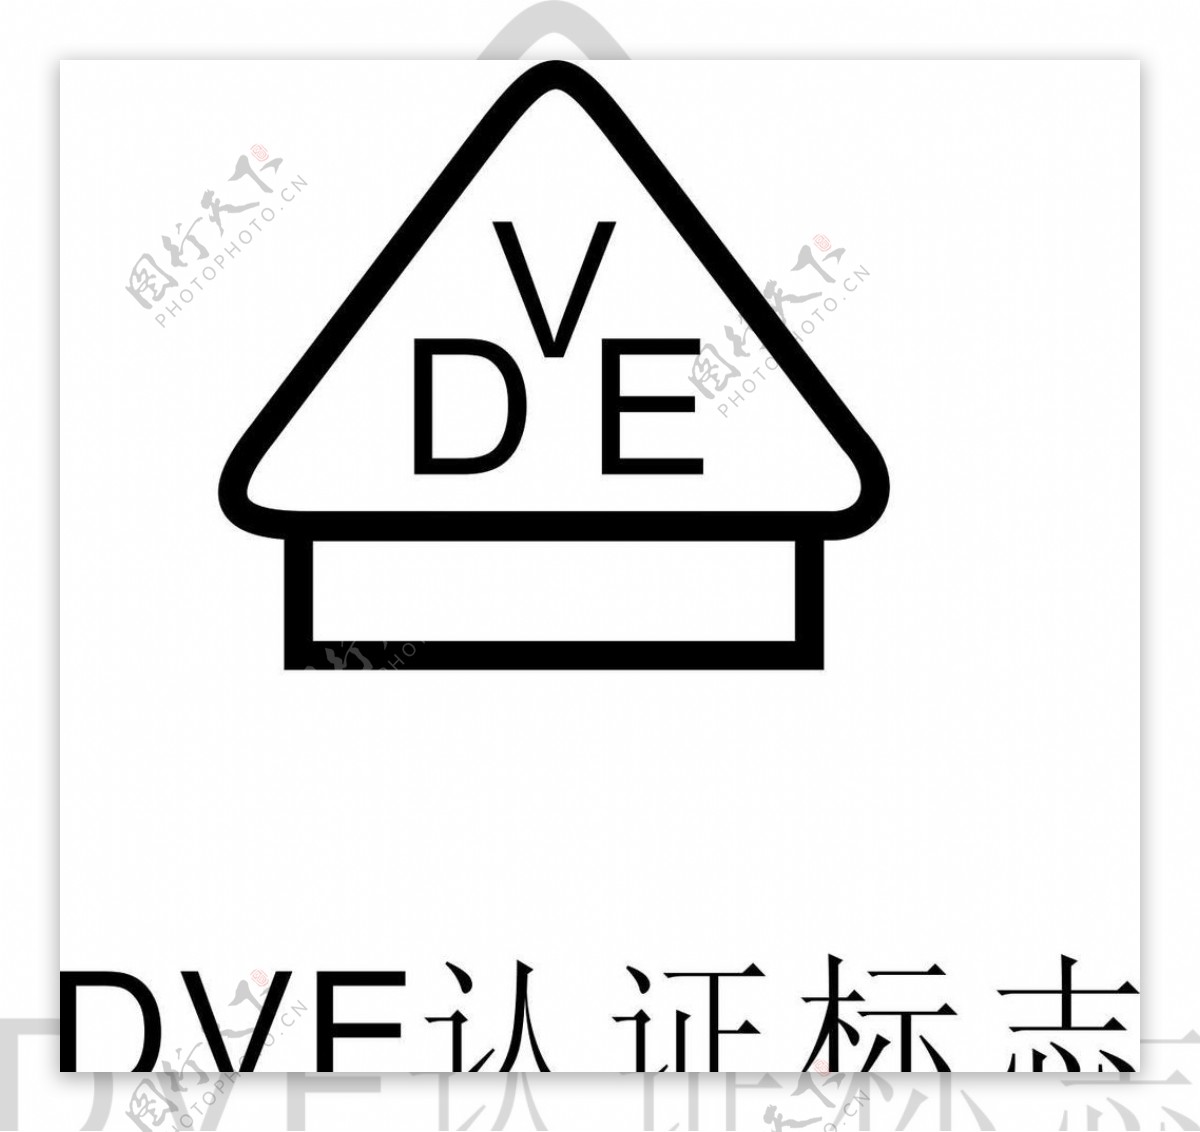 DVE认证标志图片